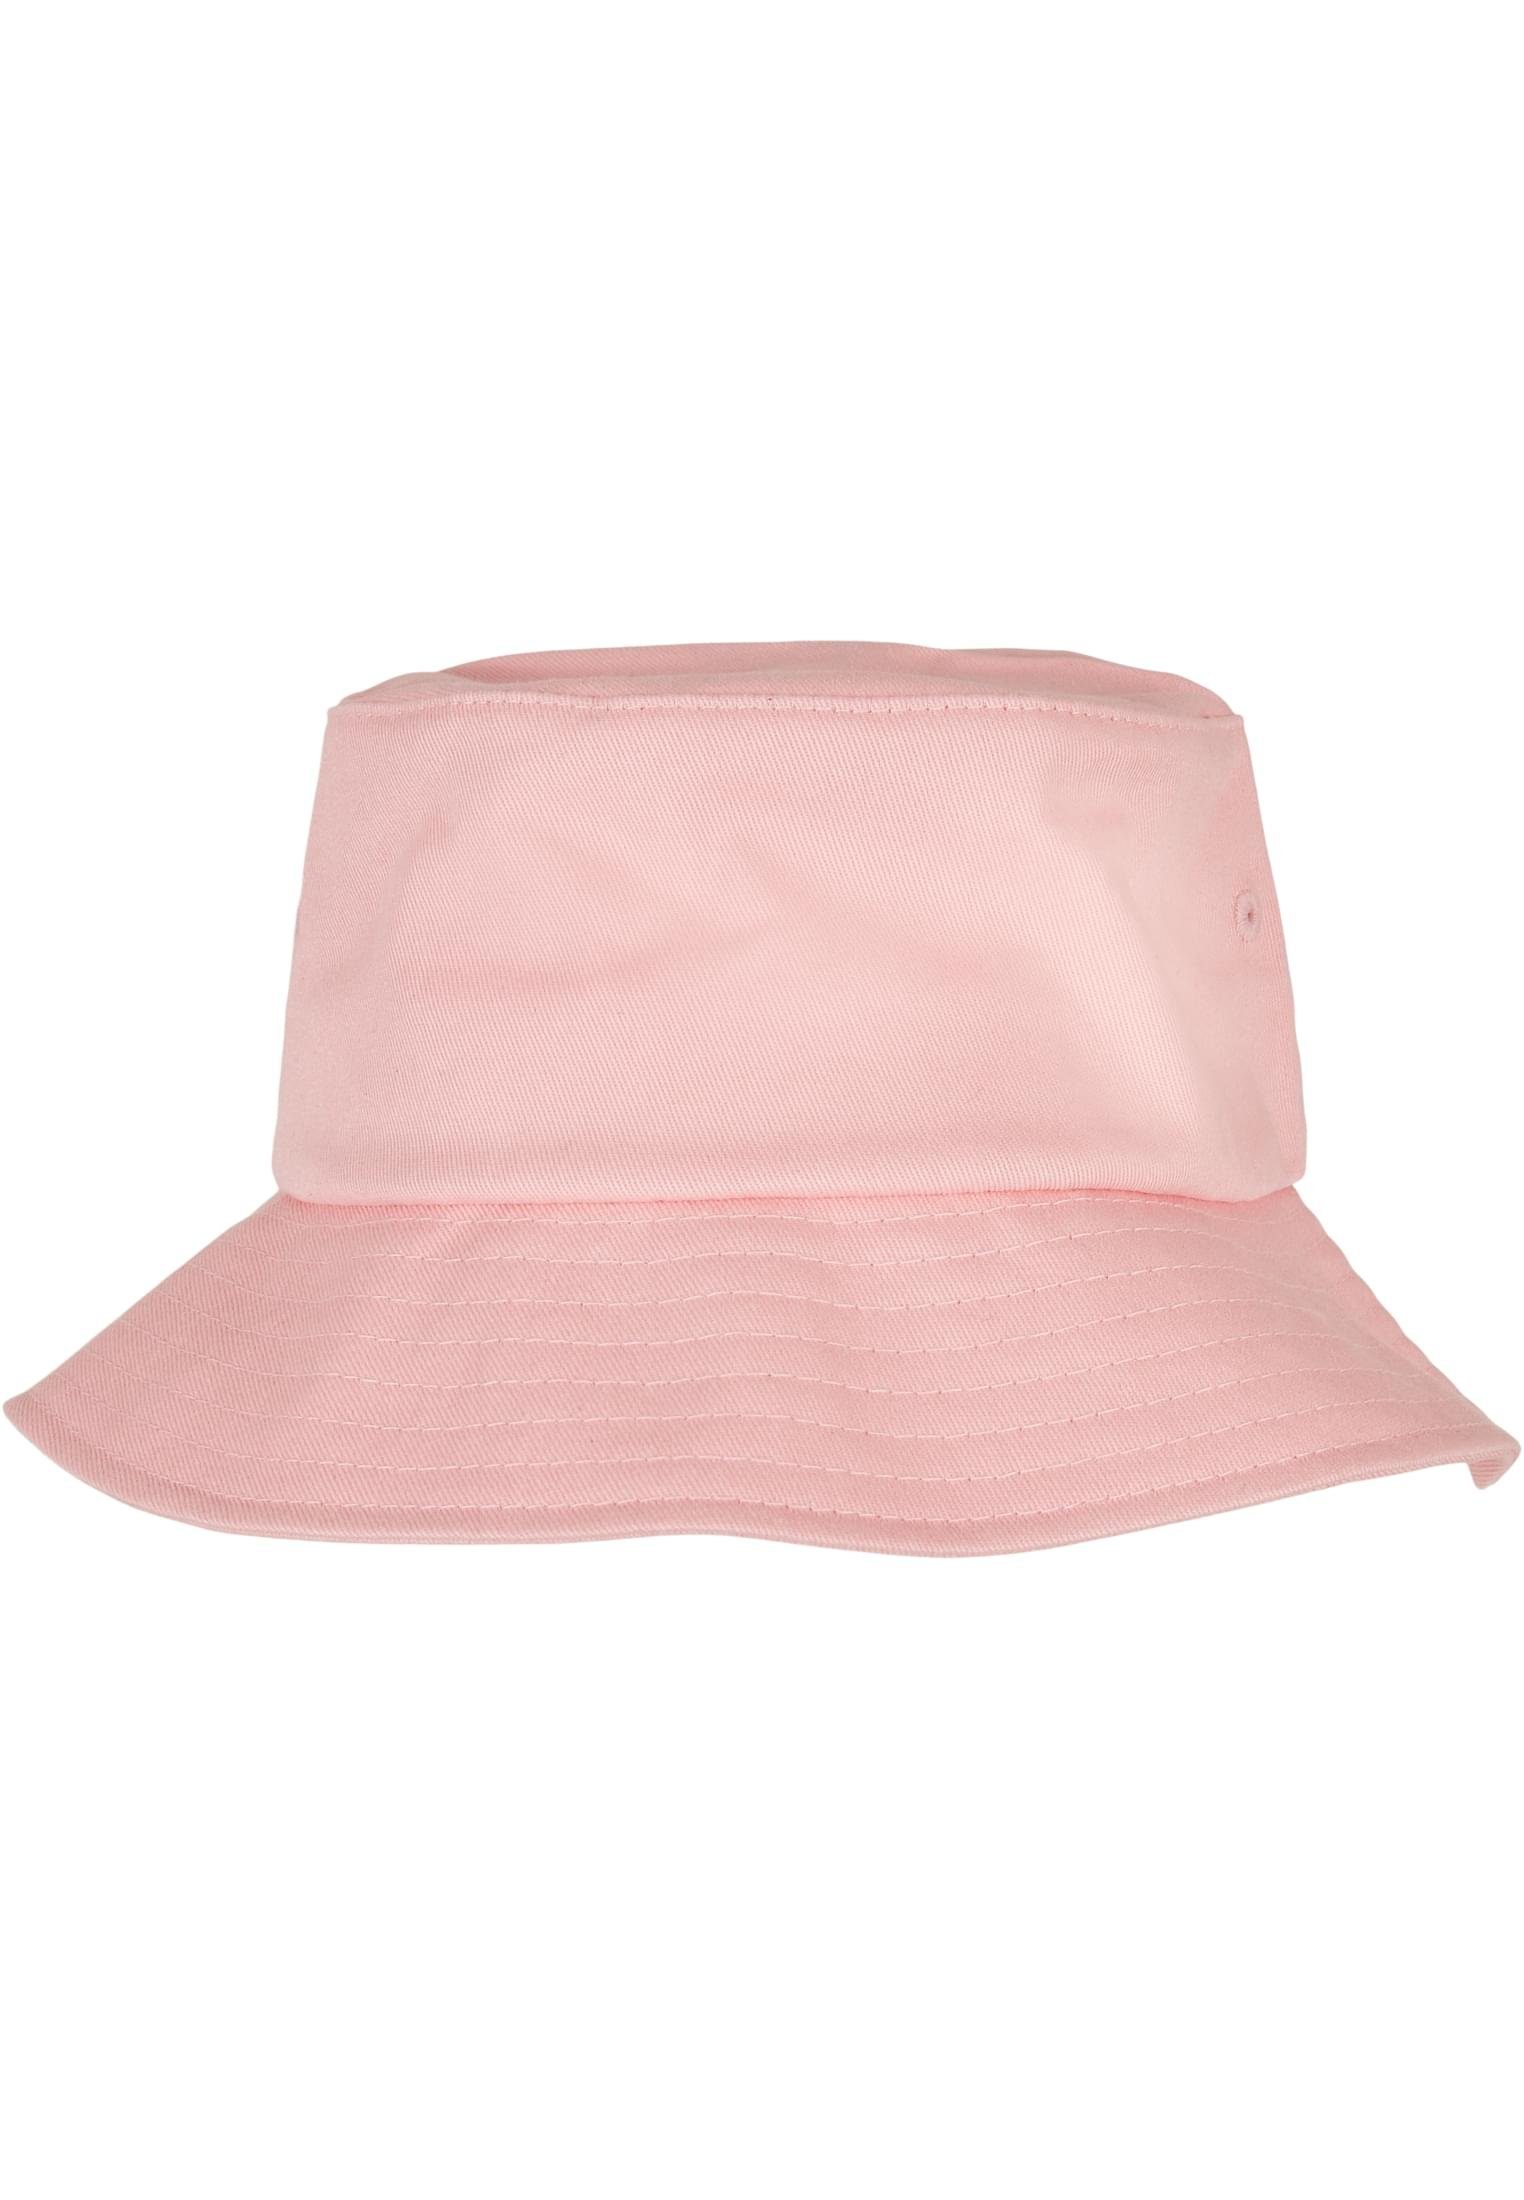 Top-Online-Shop Flexfit Flex Cap Accessoires Flexfit Hat lightpink Cotton Twill Bucket